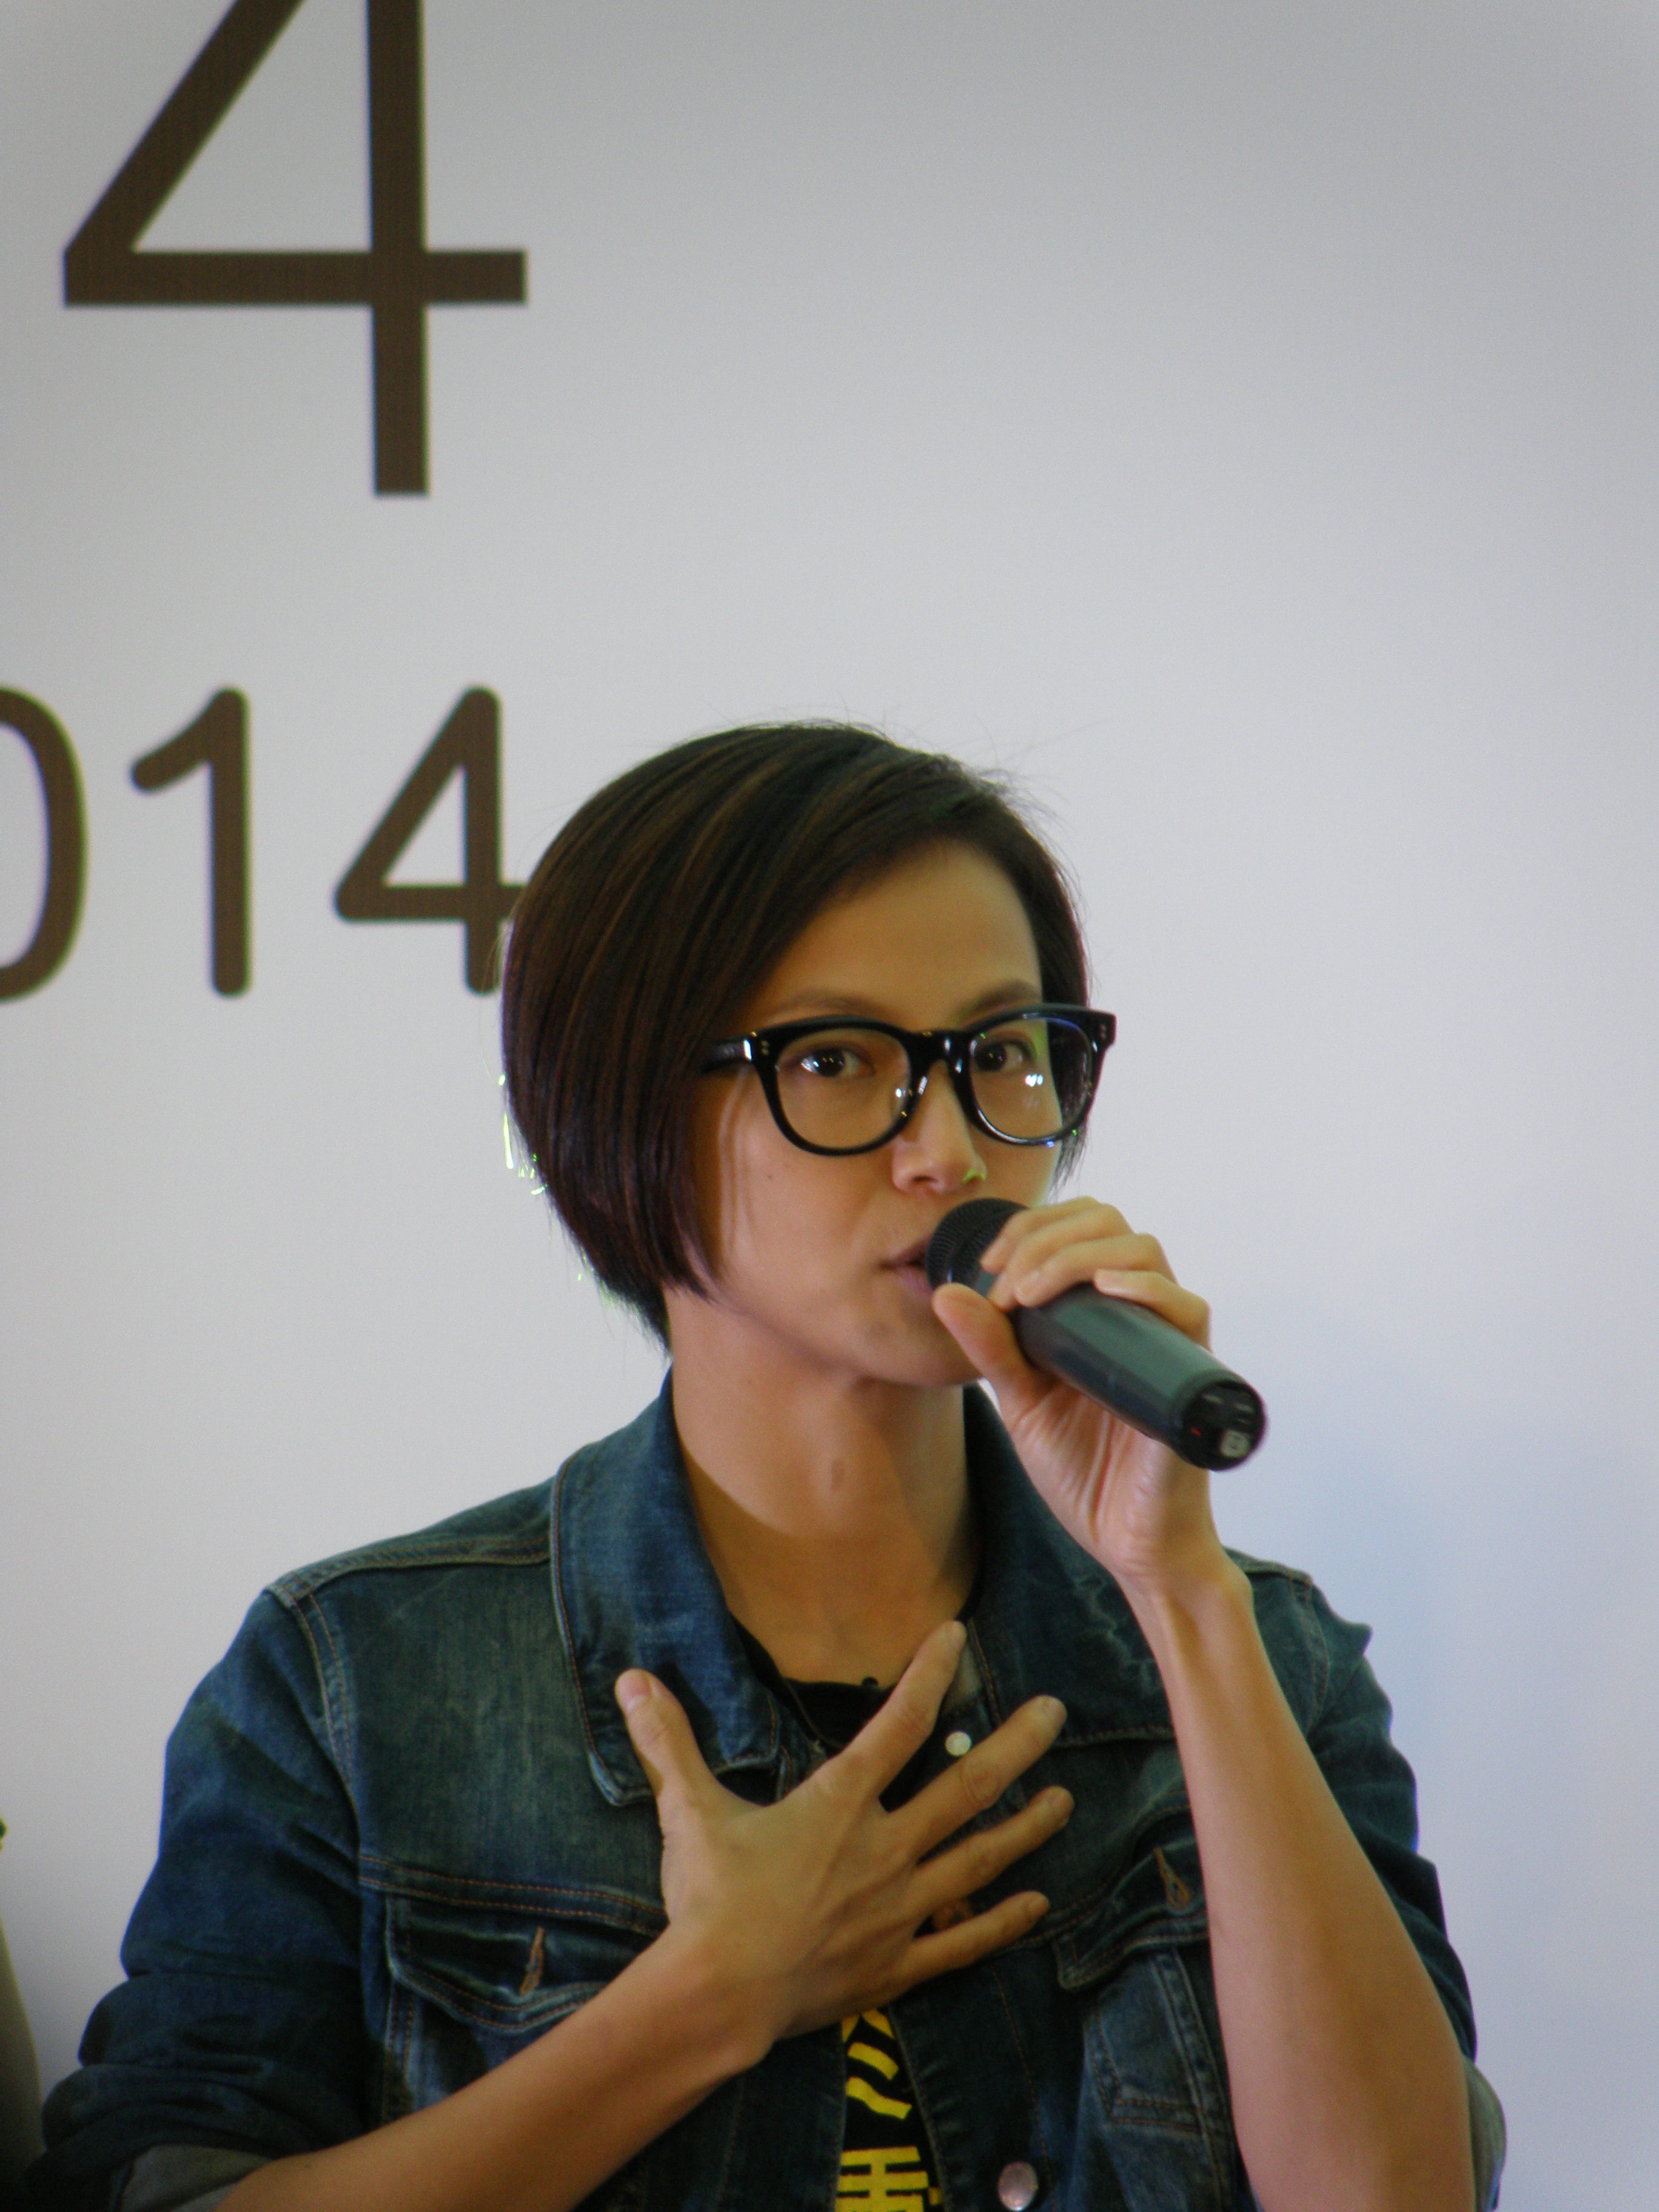 Hong Kong singer and activist Denise Ho says concerts cancelled